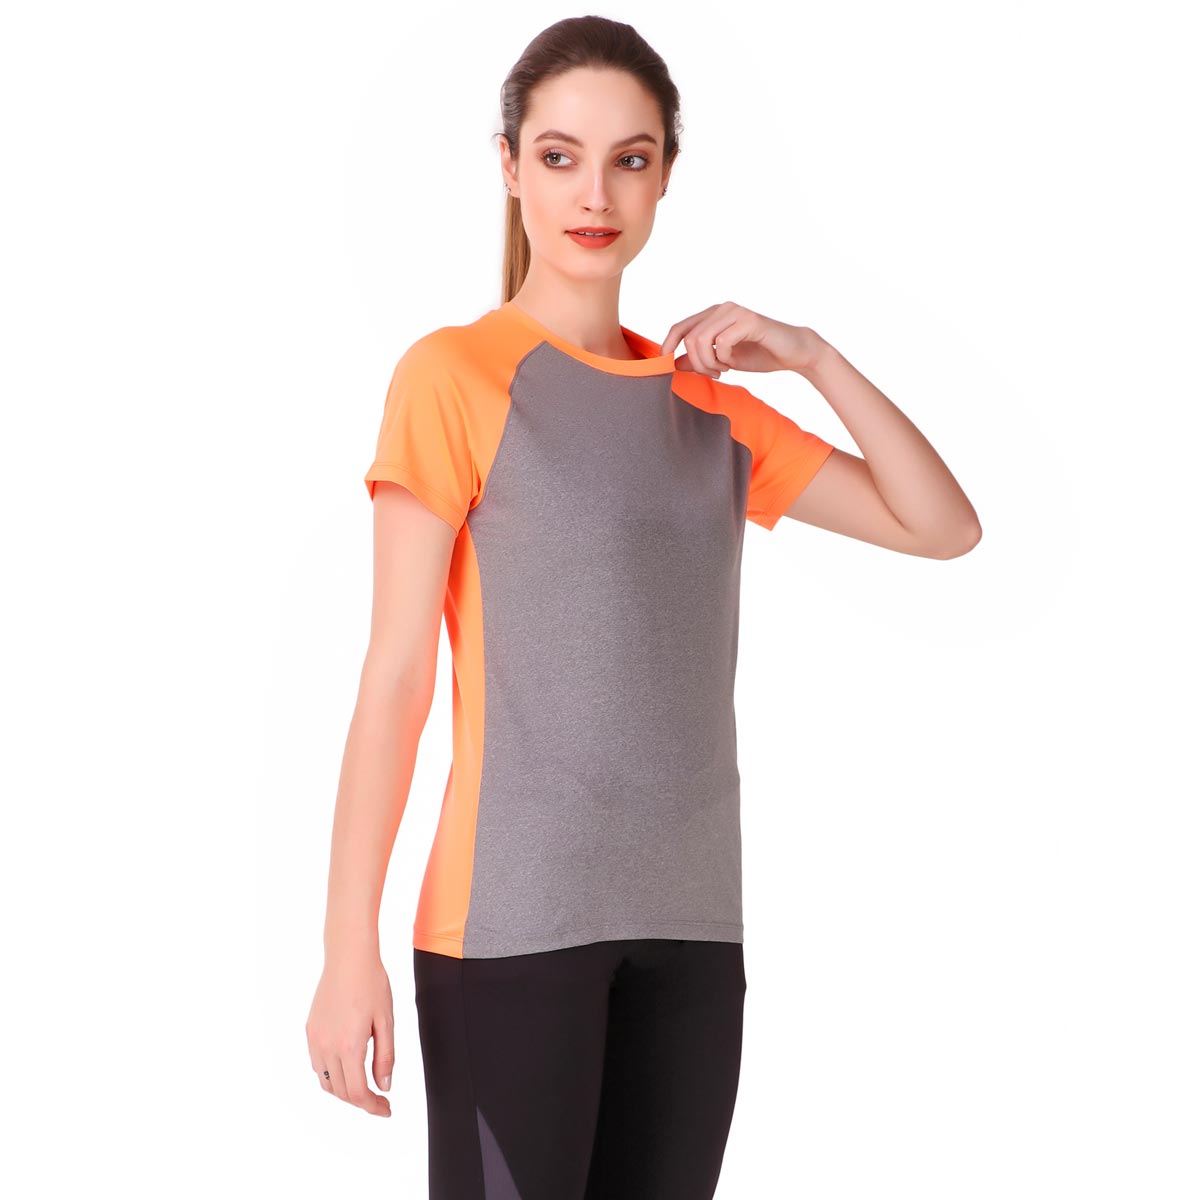 Performance Tshirt For Women (Grey/Orange)